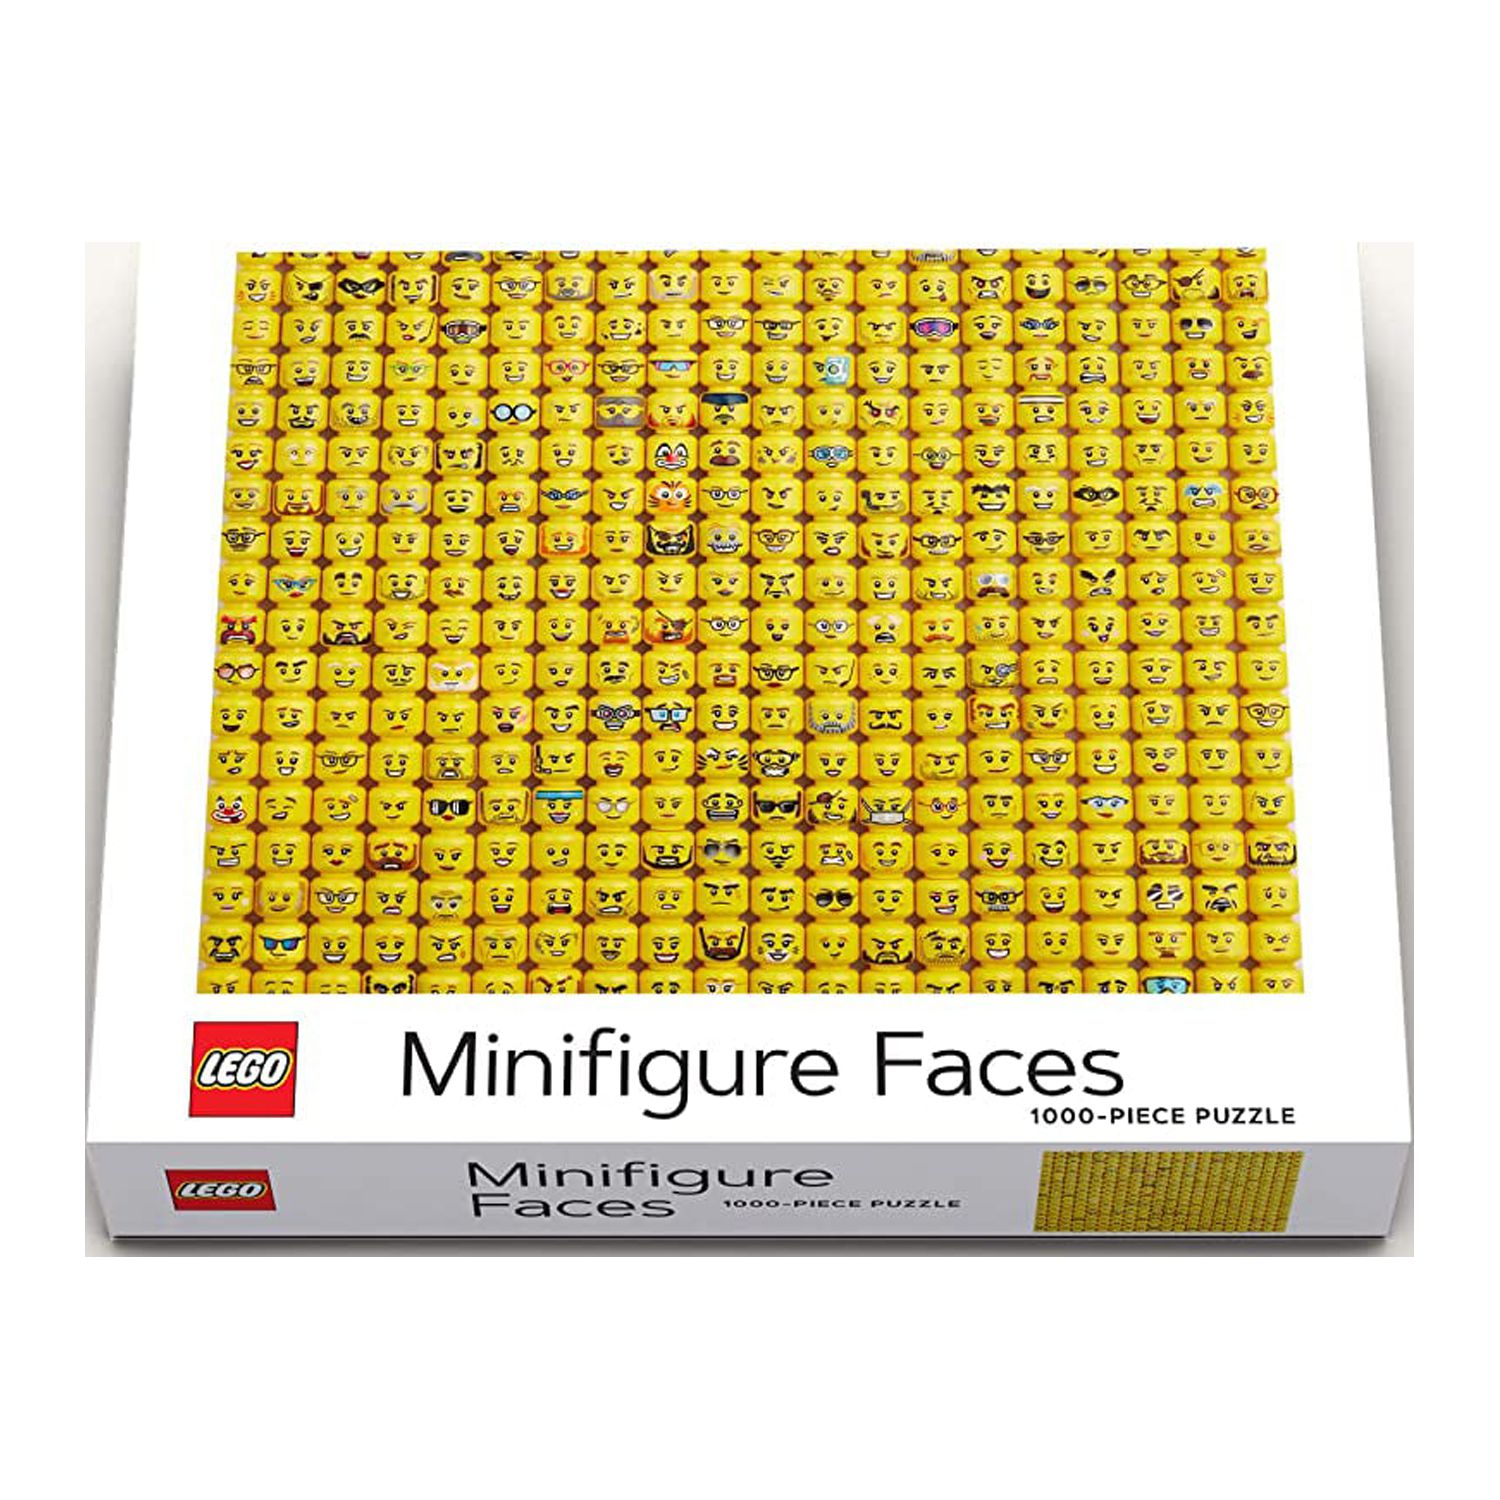 Lego: LEGO Minifigure Faces 1000-Piece Puzzle (Jigsaw) - image 3 of 3